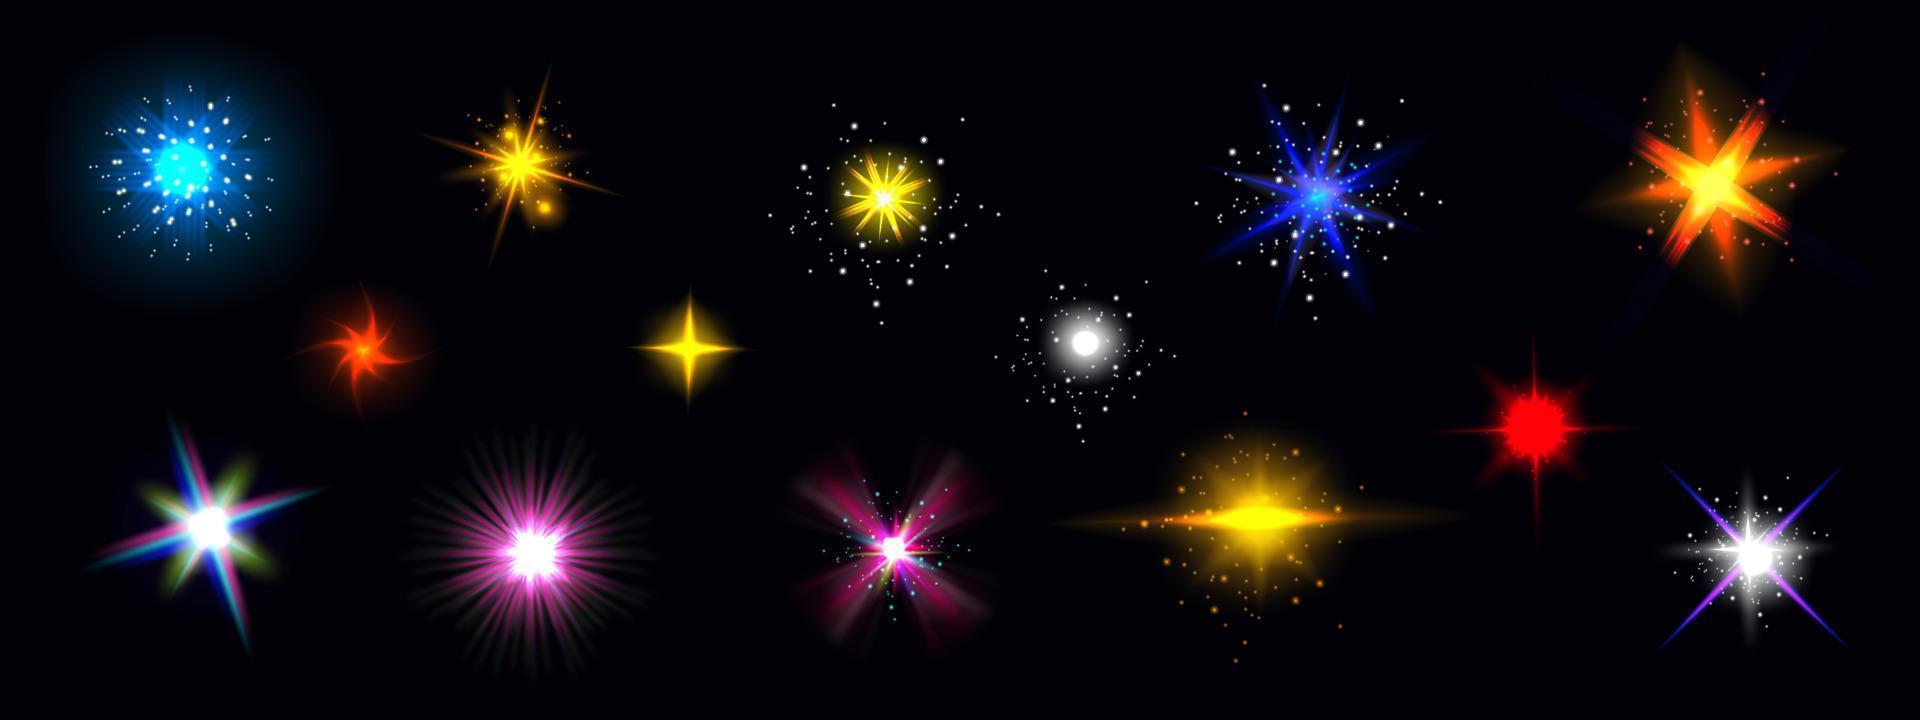 brilho da luz das estrelas, conjunto de brilho vetorial colorido brilhante vetor